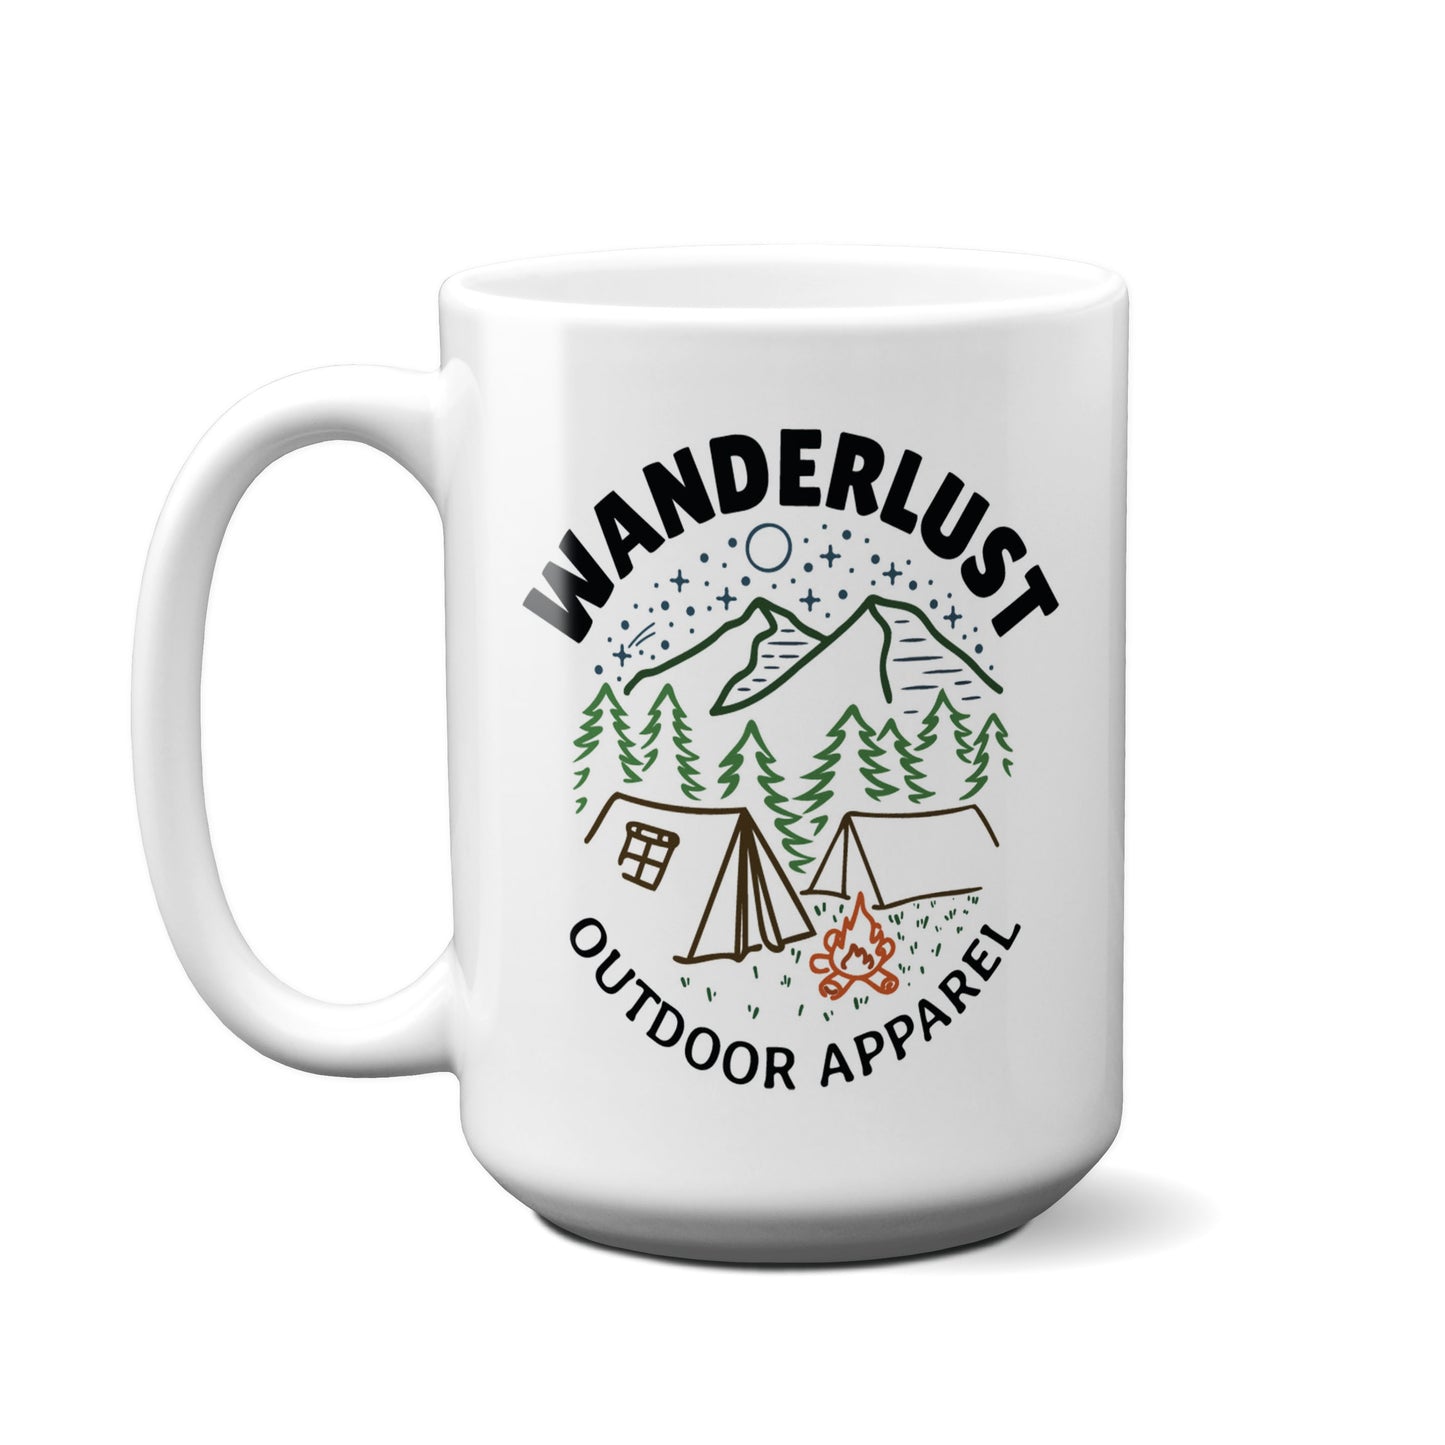 Wanderlust Outdoor Apparel Badge Mug